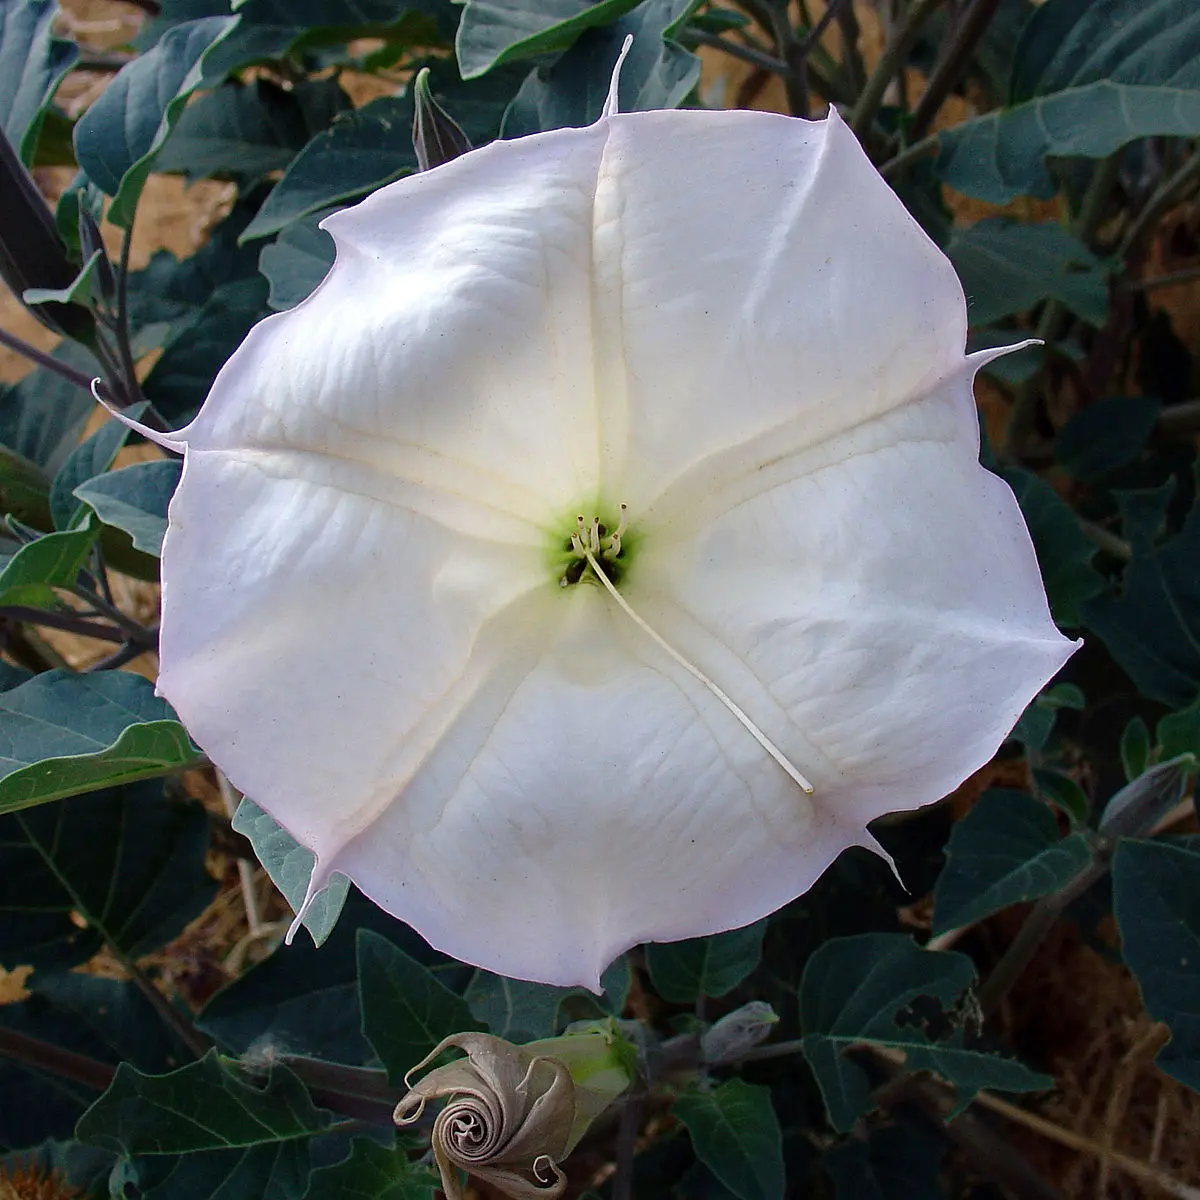 Datura fiore: pianta ornamentale elegante (45 caratteri)